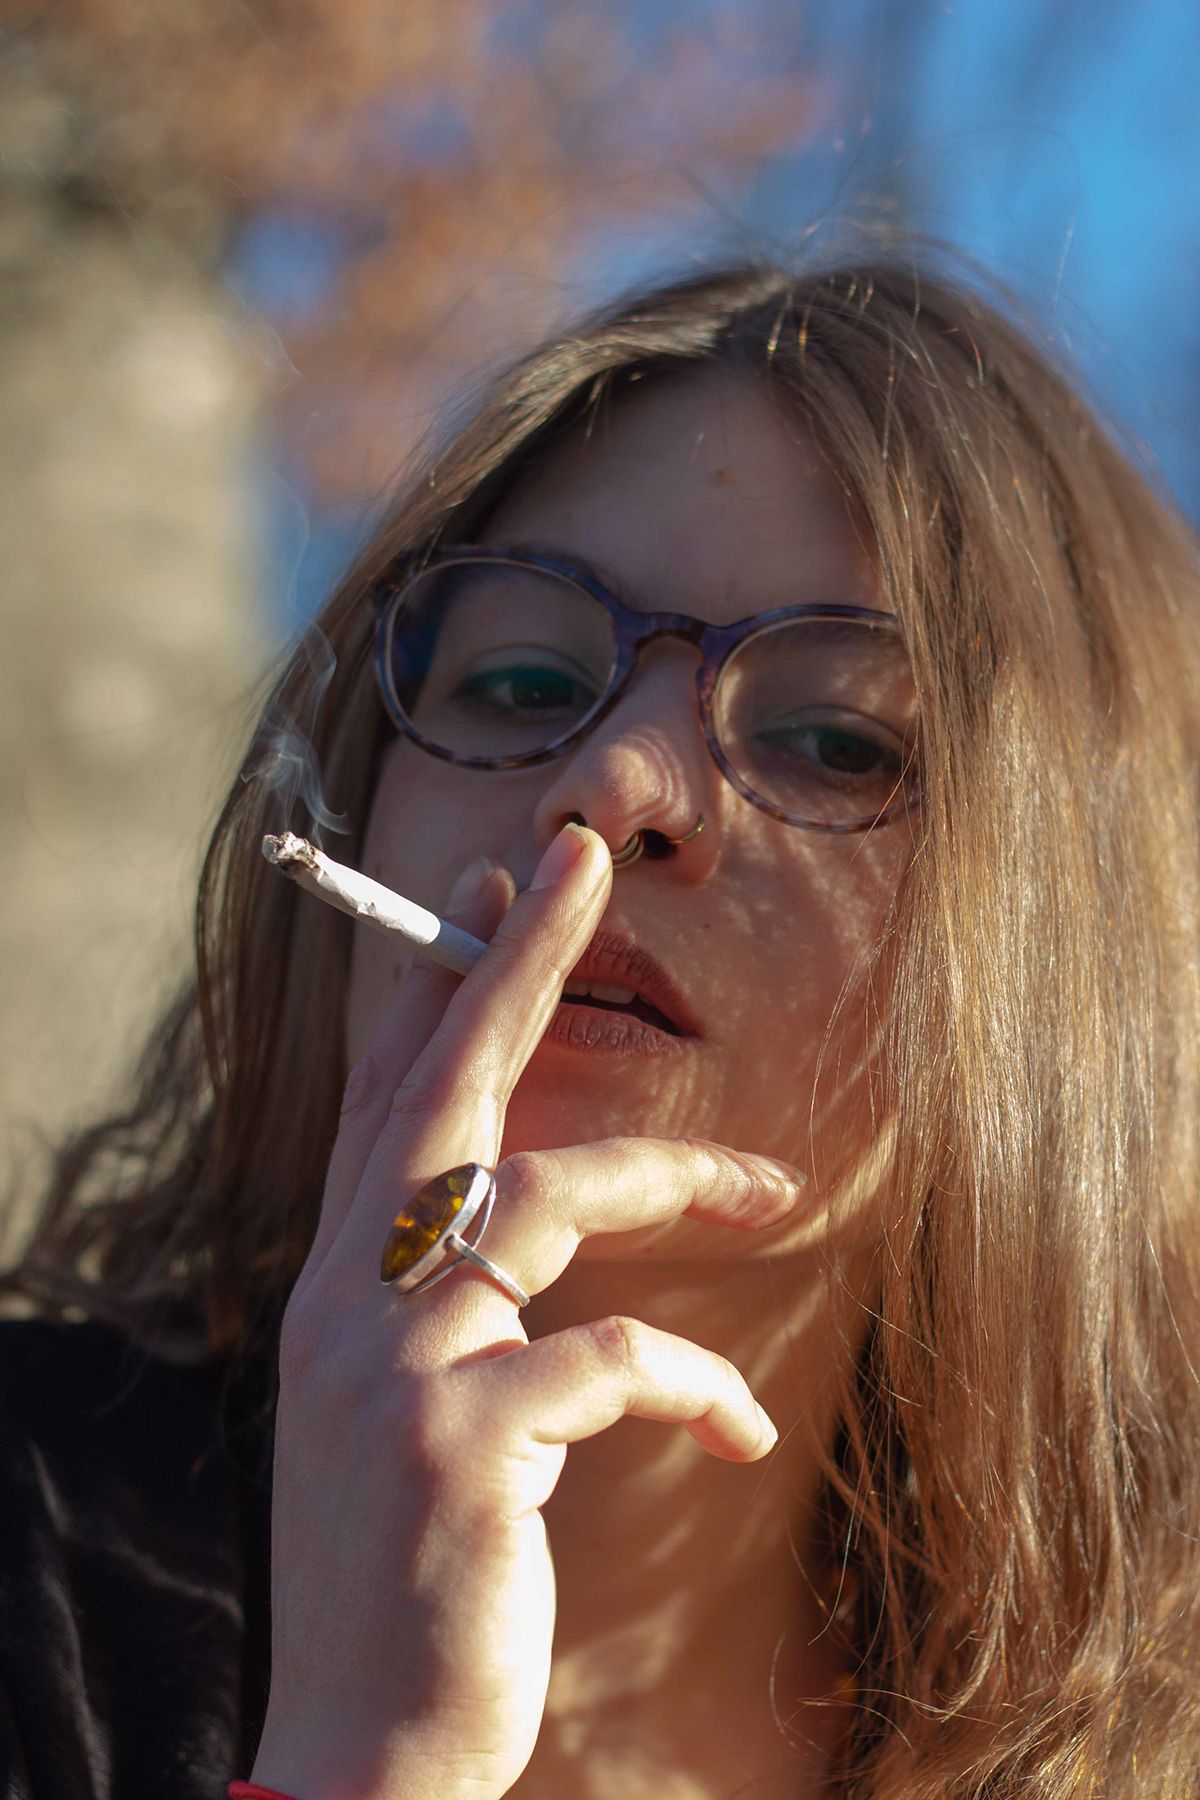 sexy smoking smoke women portrait enjoying city Photography  Street closeup